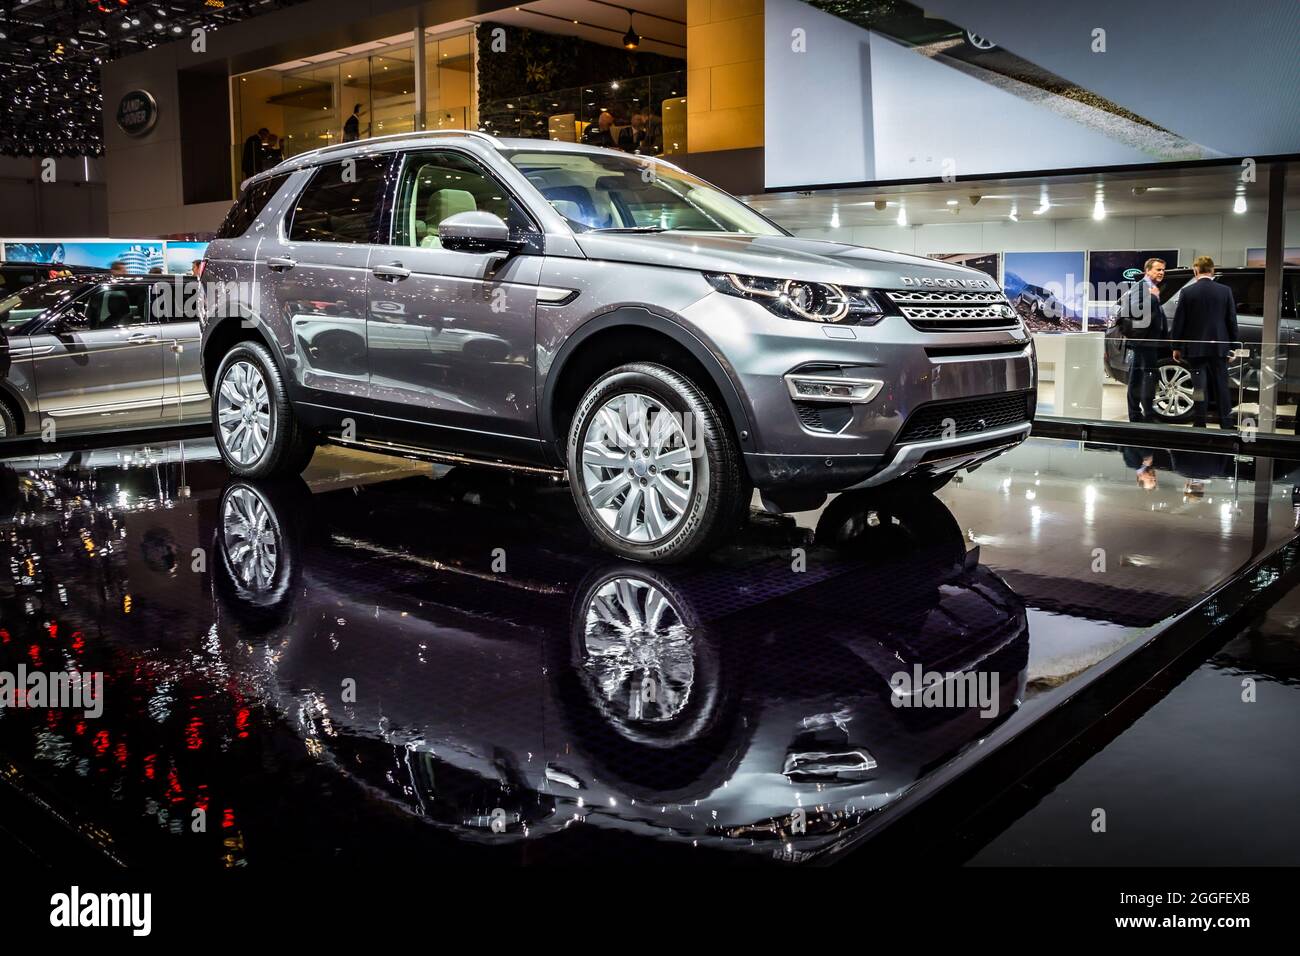 Land Rover Discovery Sport SUV car showcased at the Geneva International Motor Show. Switzerland - March 1, 2016. Stock Photo